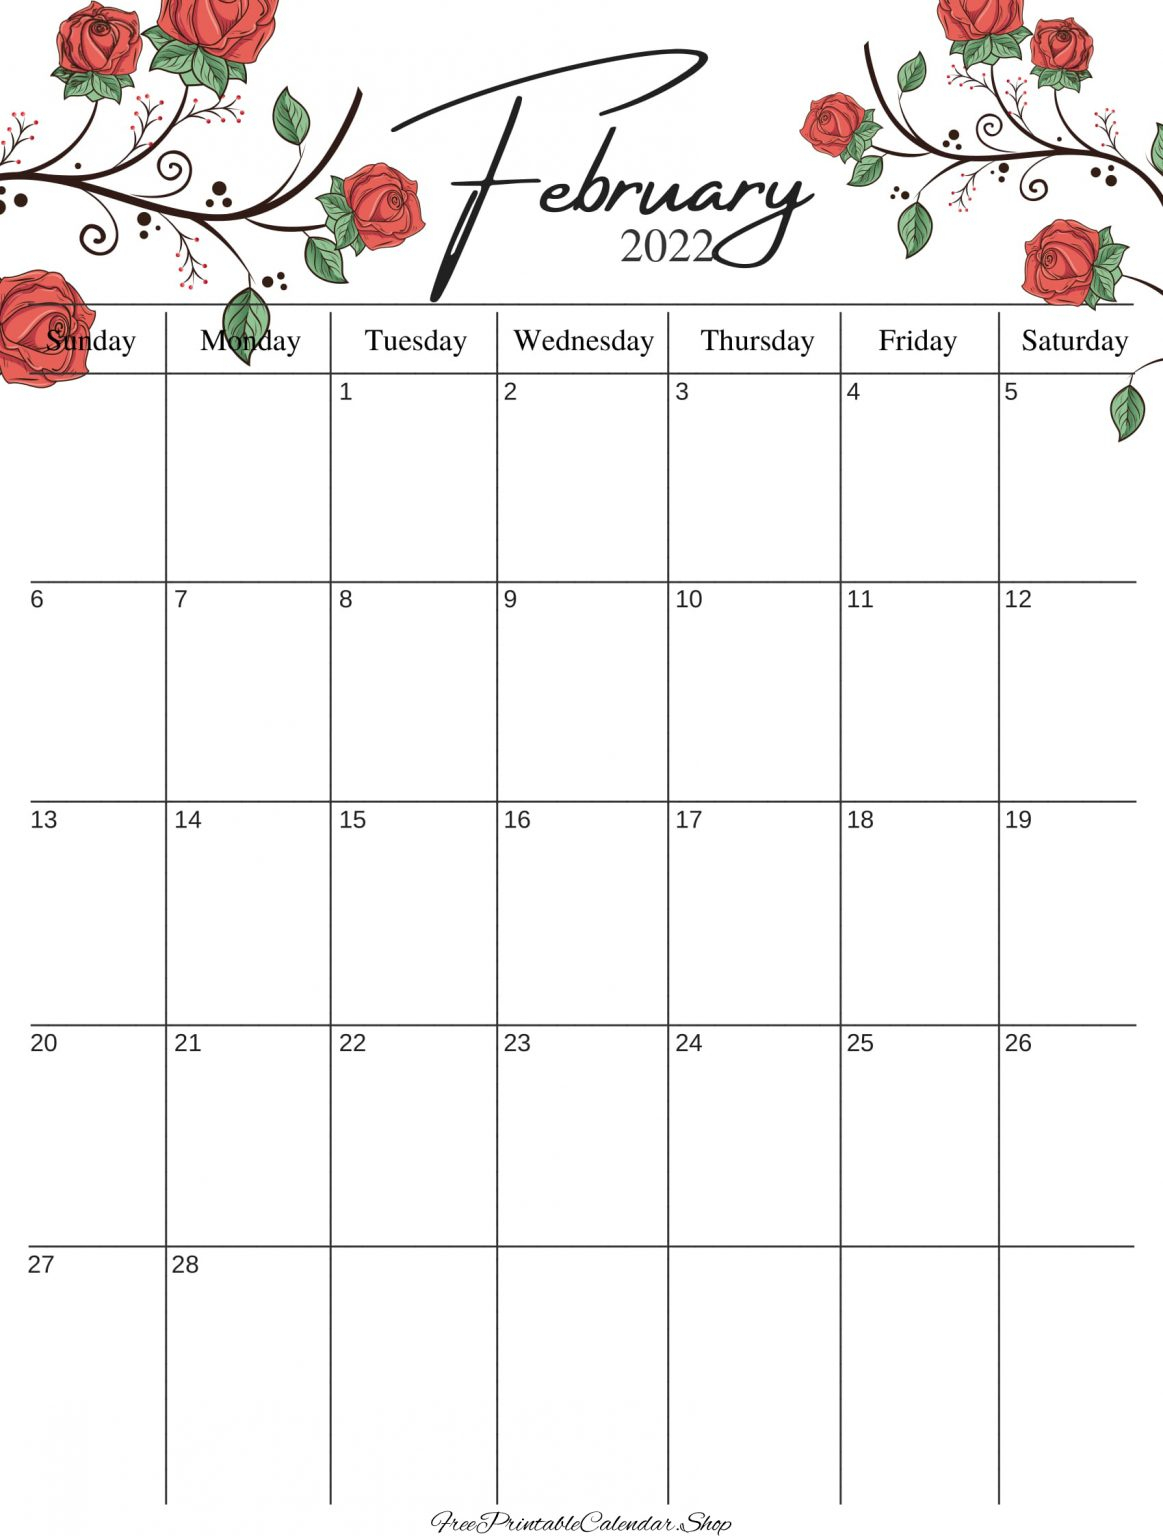 Cute February 2022 Calendar Pdf Jpg Free Shop